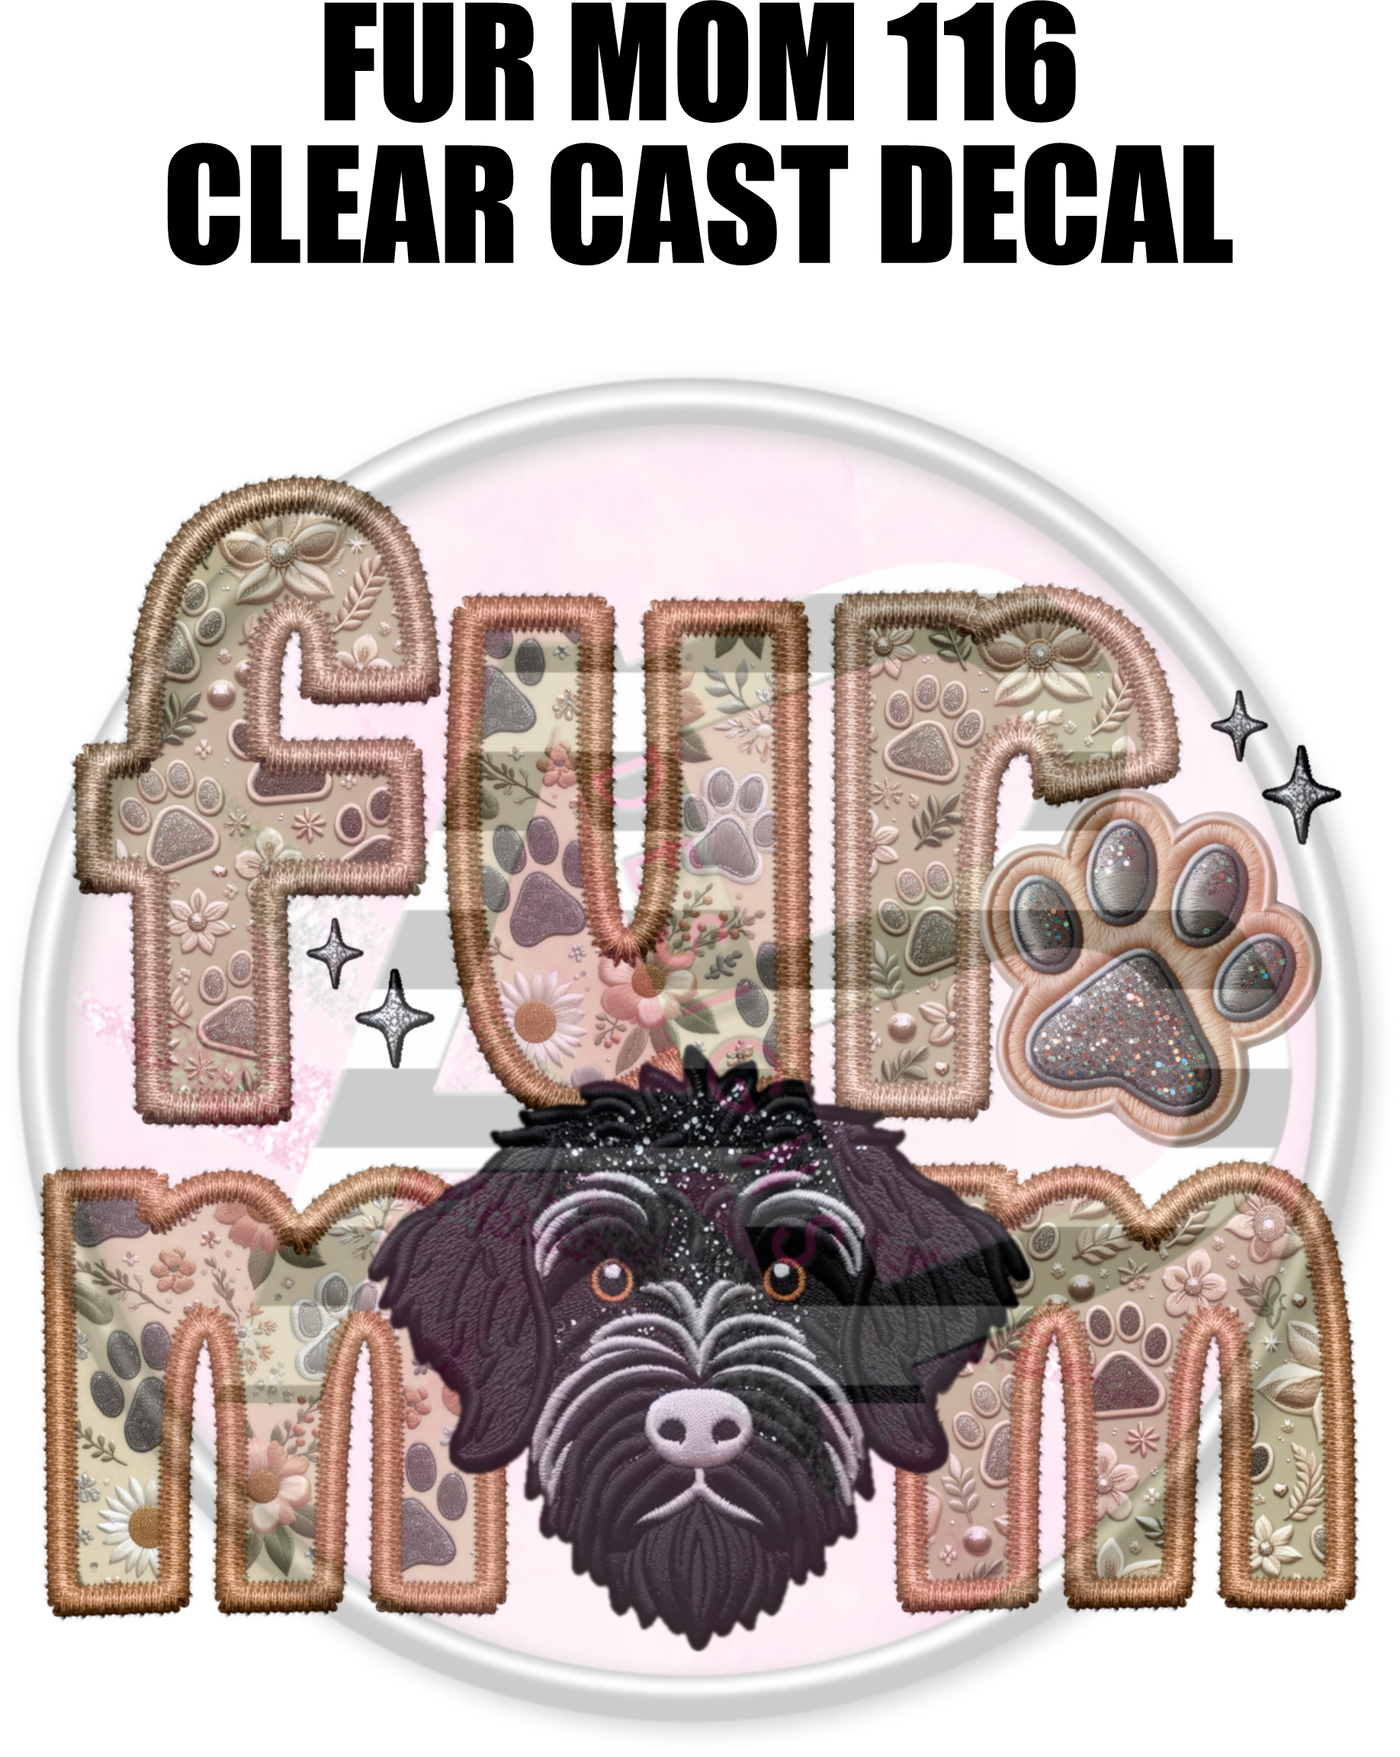 Fur Mom 116 - Clear Cast Decal